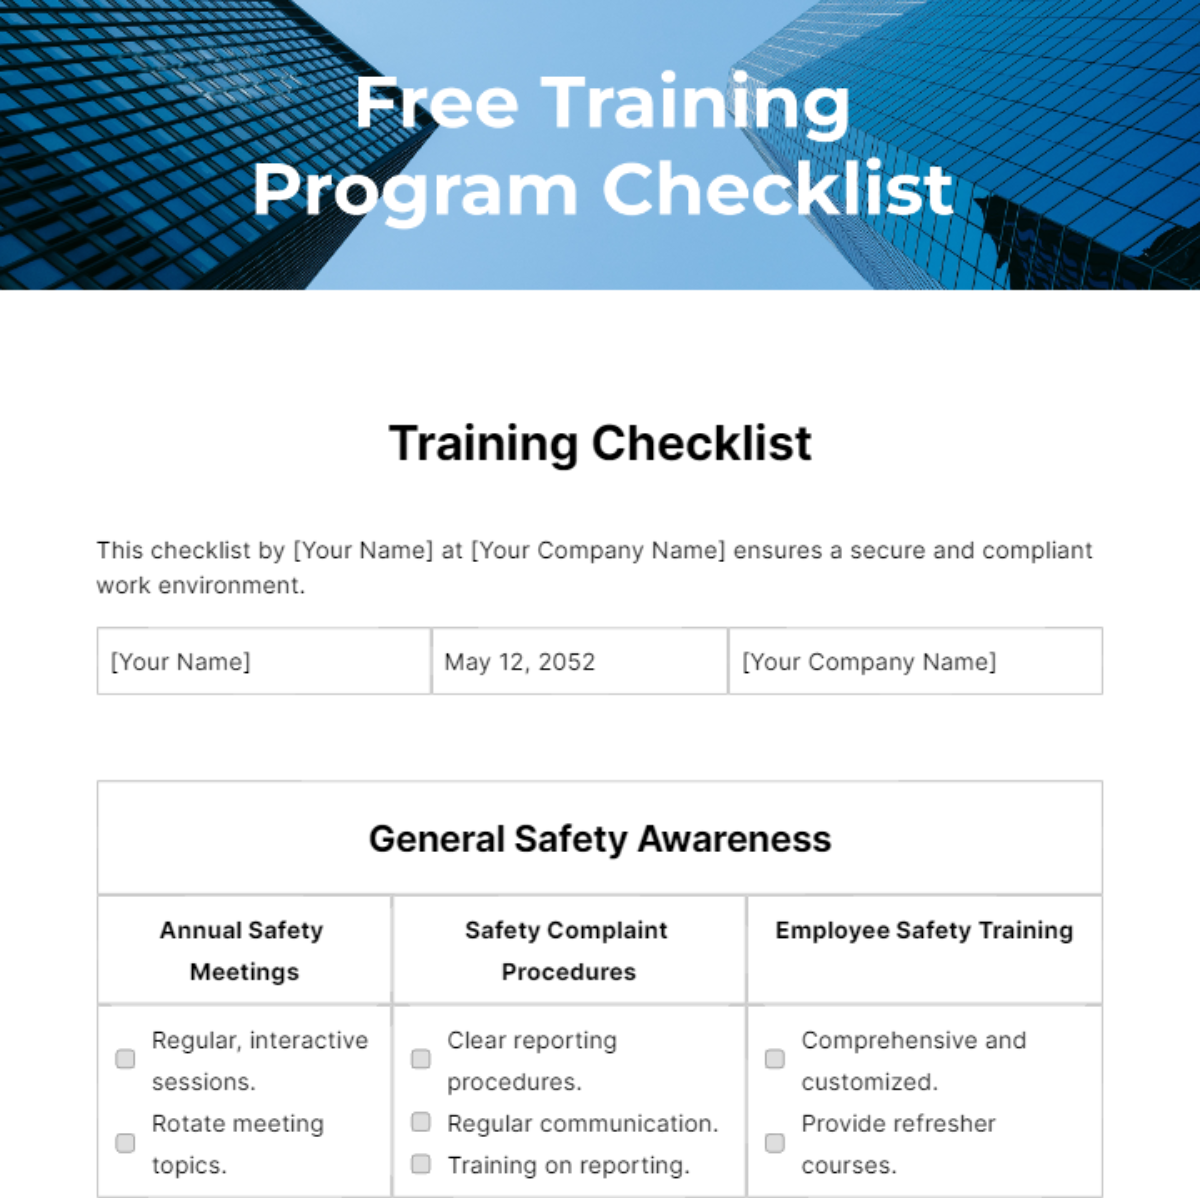 Free Training Program Checklist Template